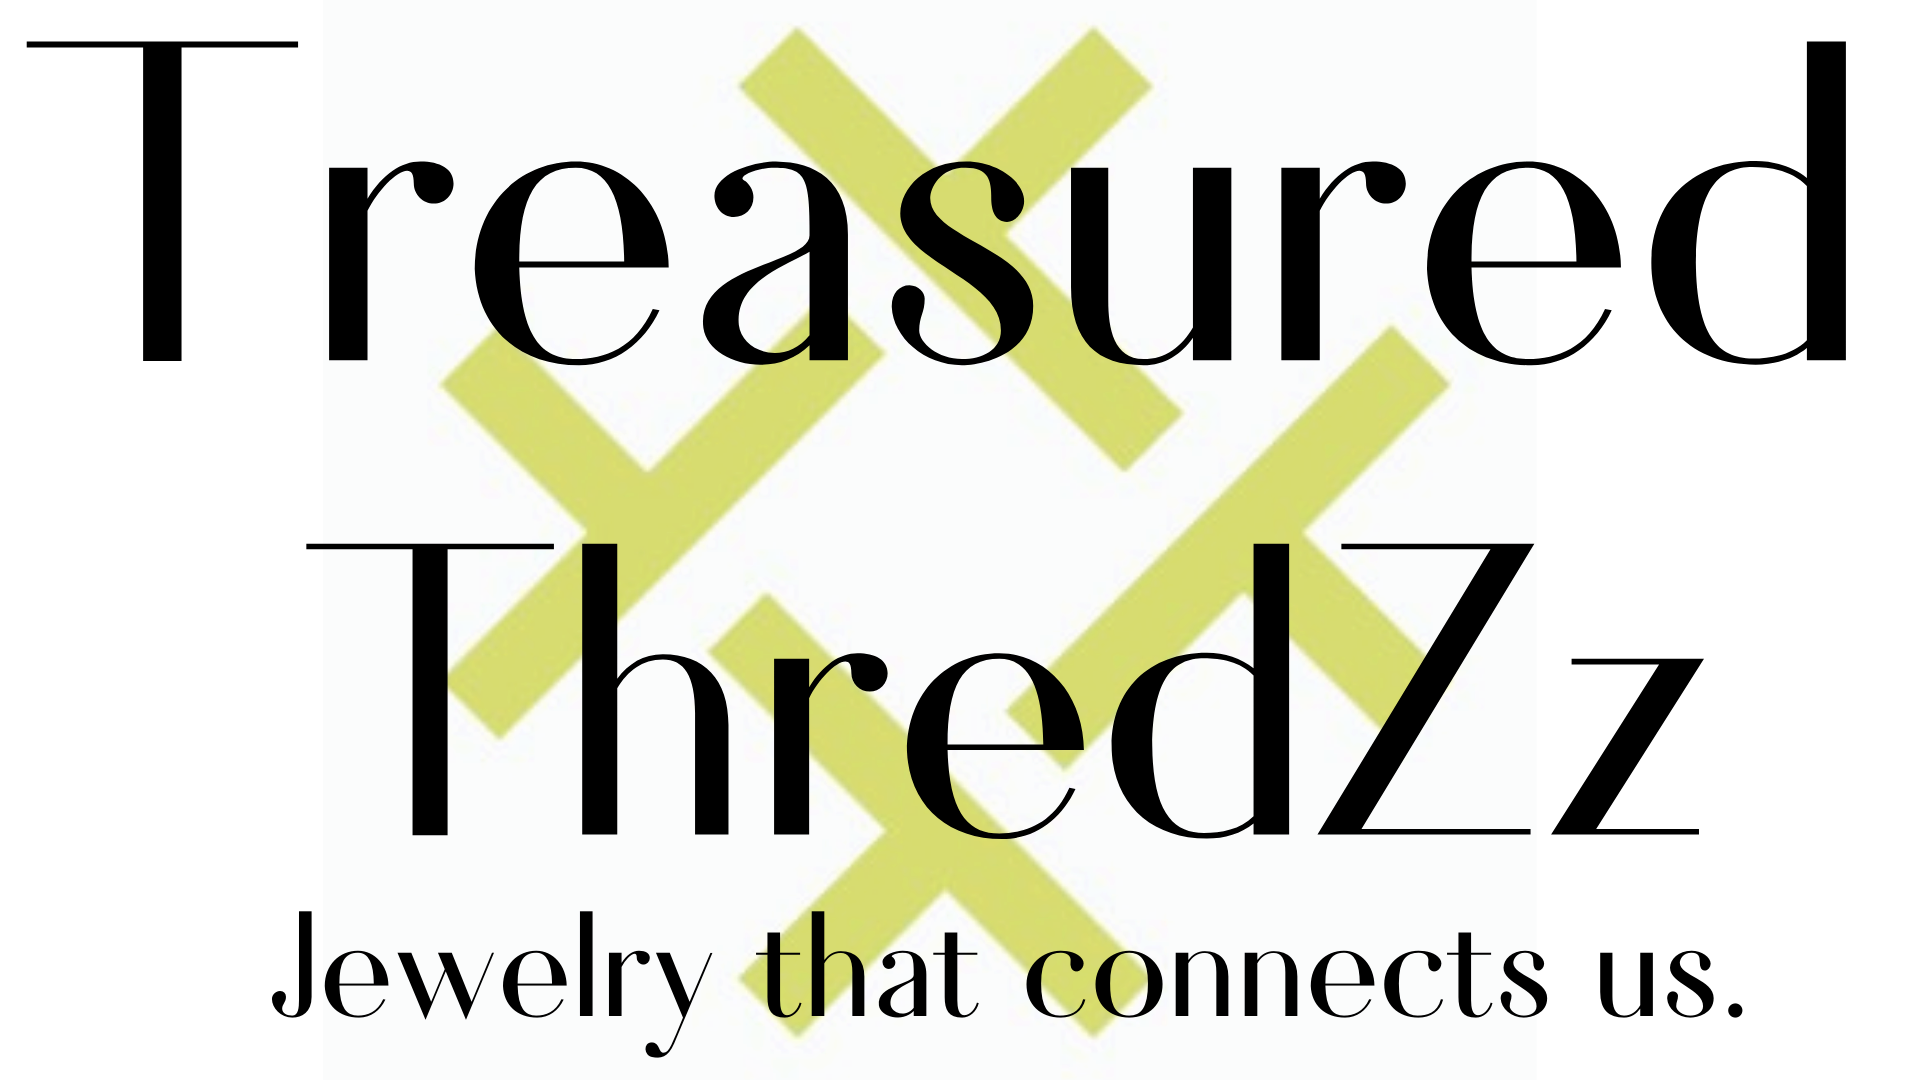 Treasured ThredZz